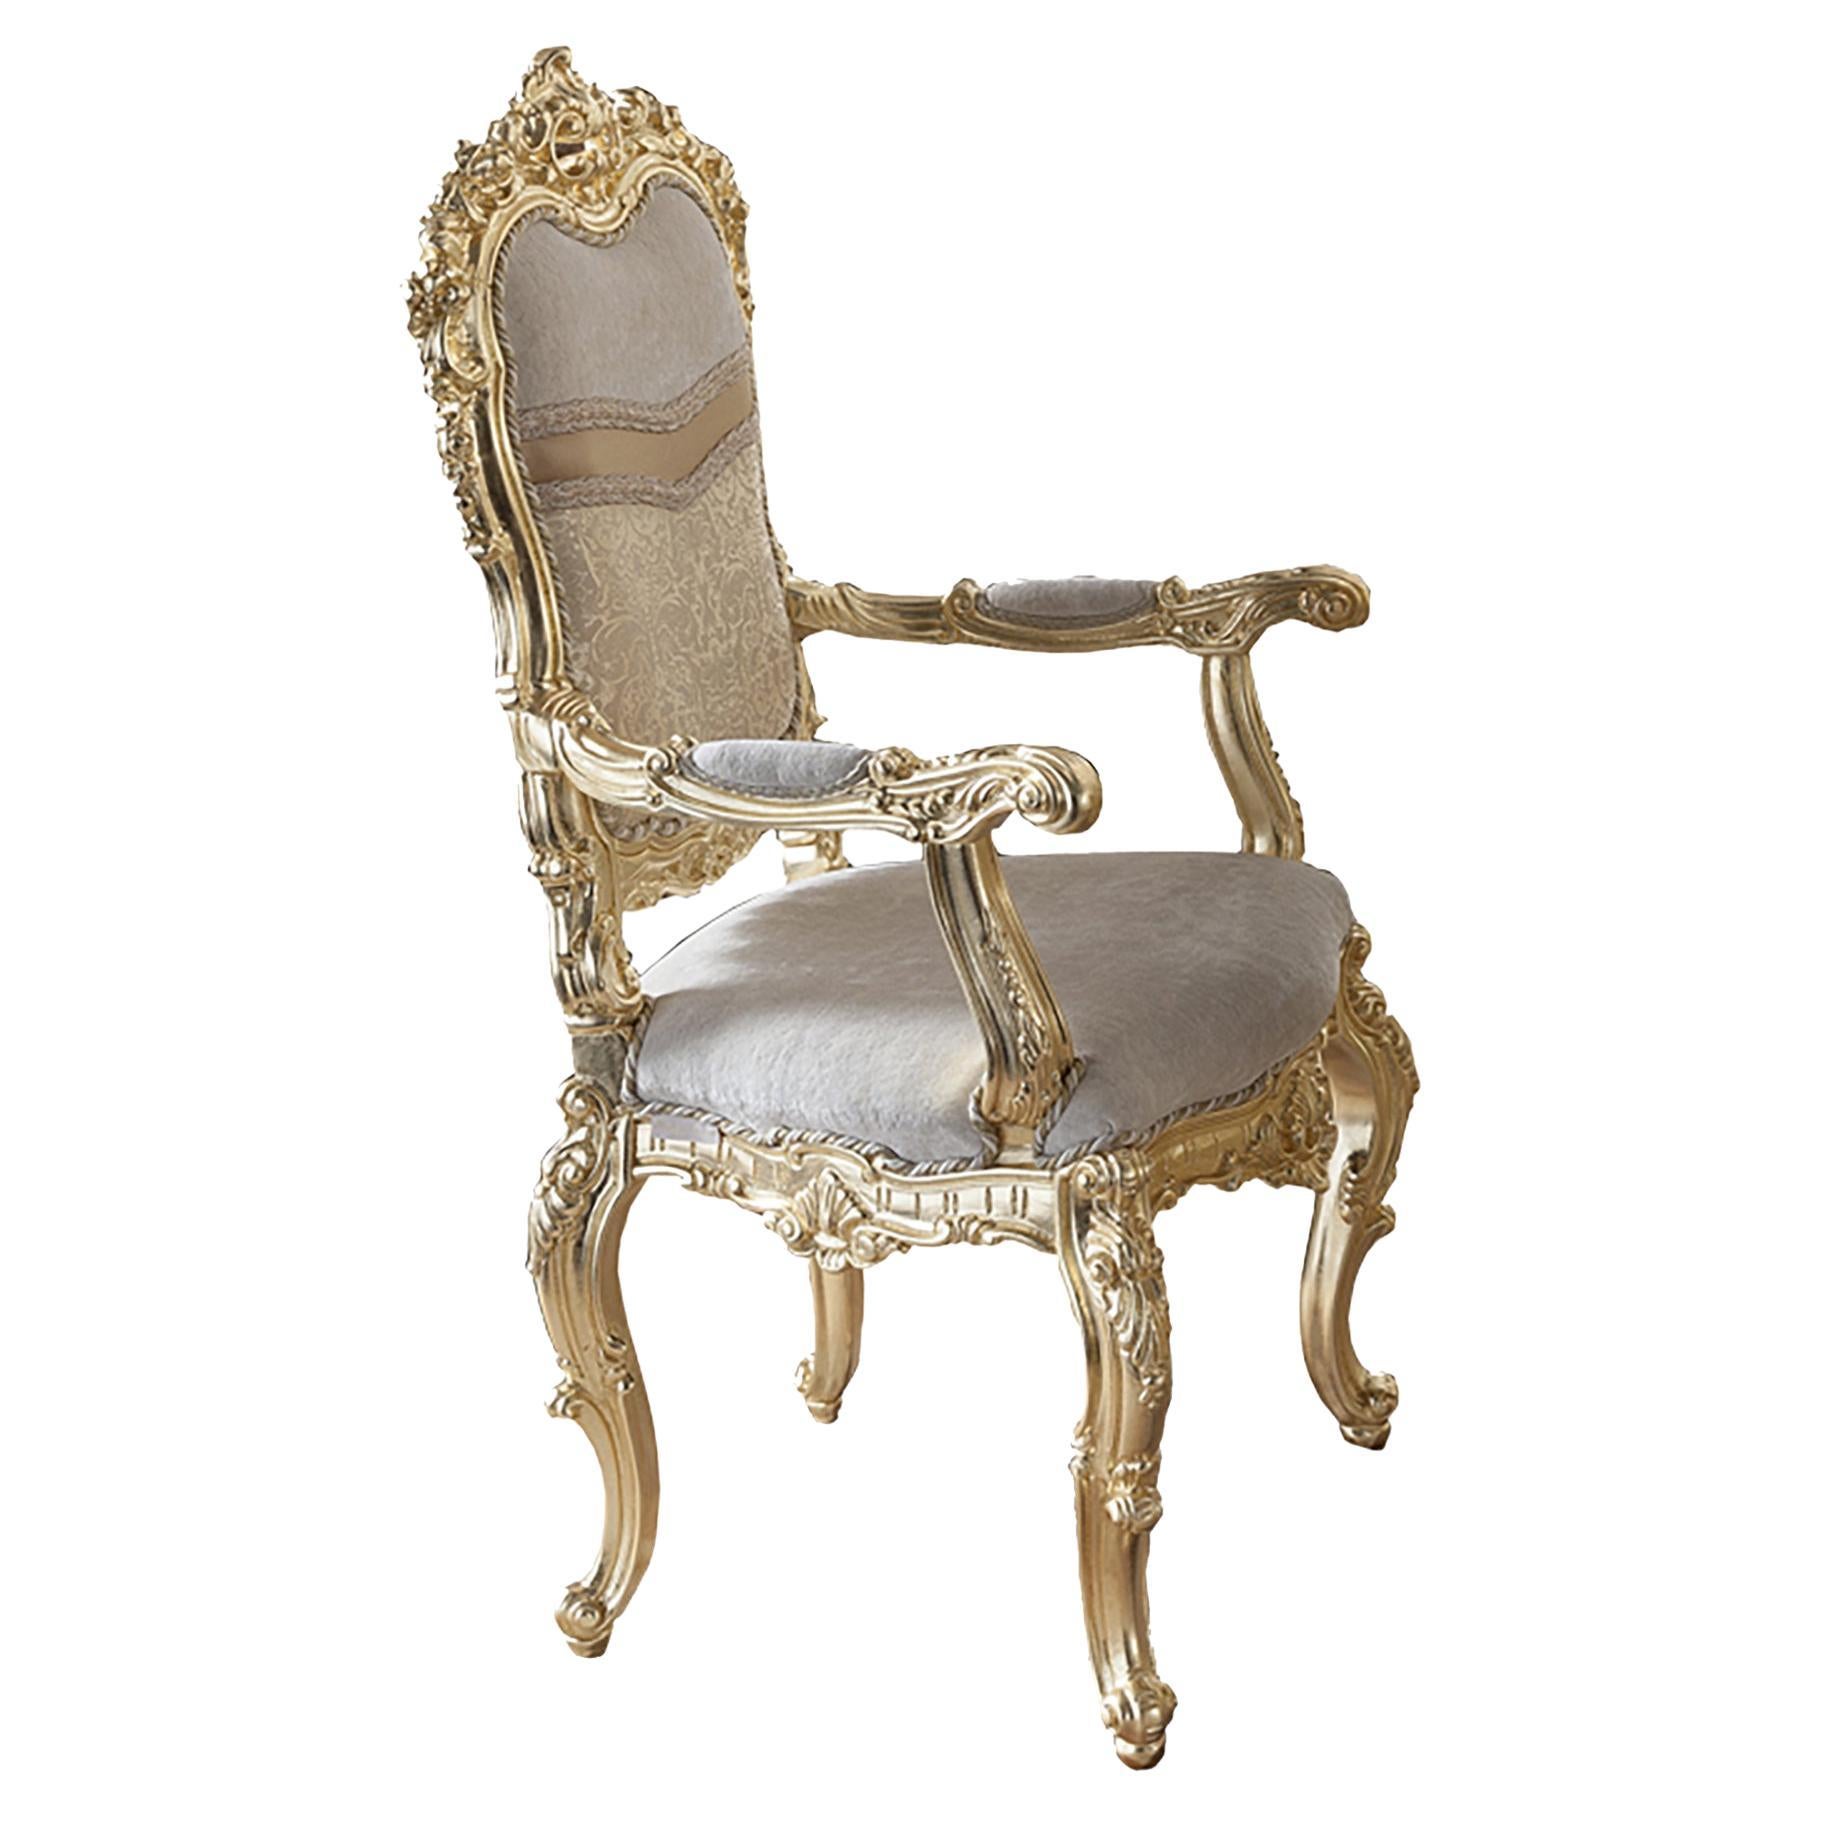 Chaise baroque royale avec accoudoirs feuille d'or de Modenese Interiors